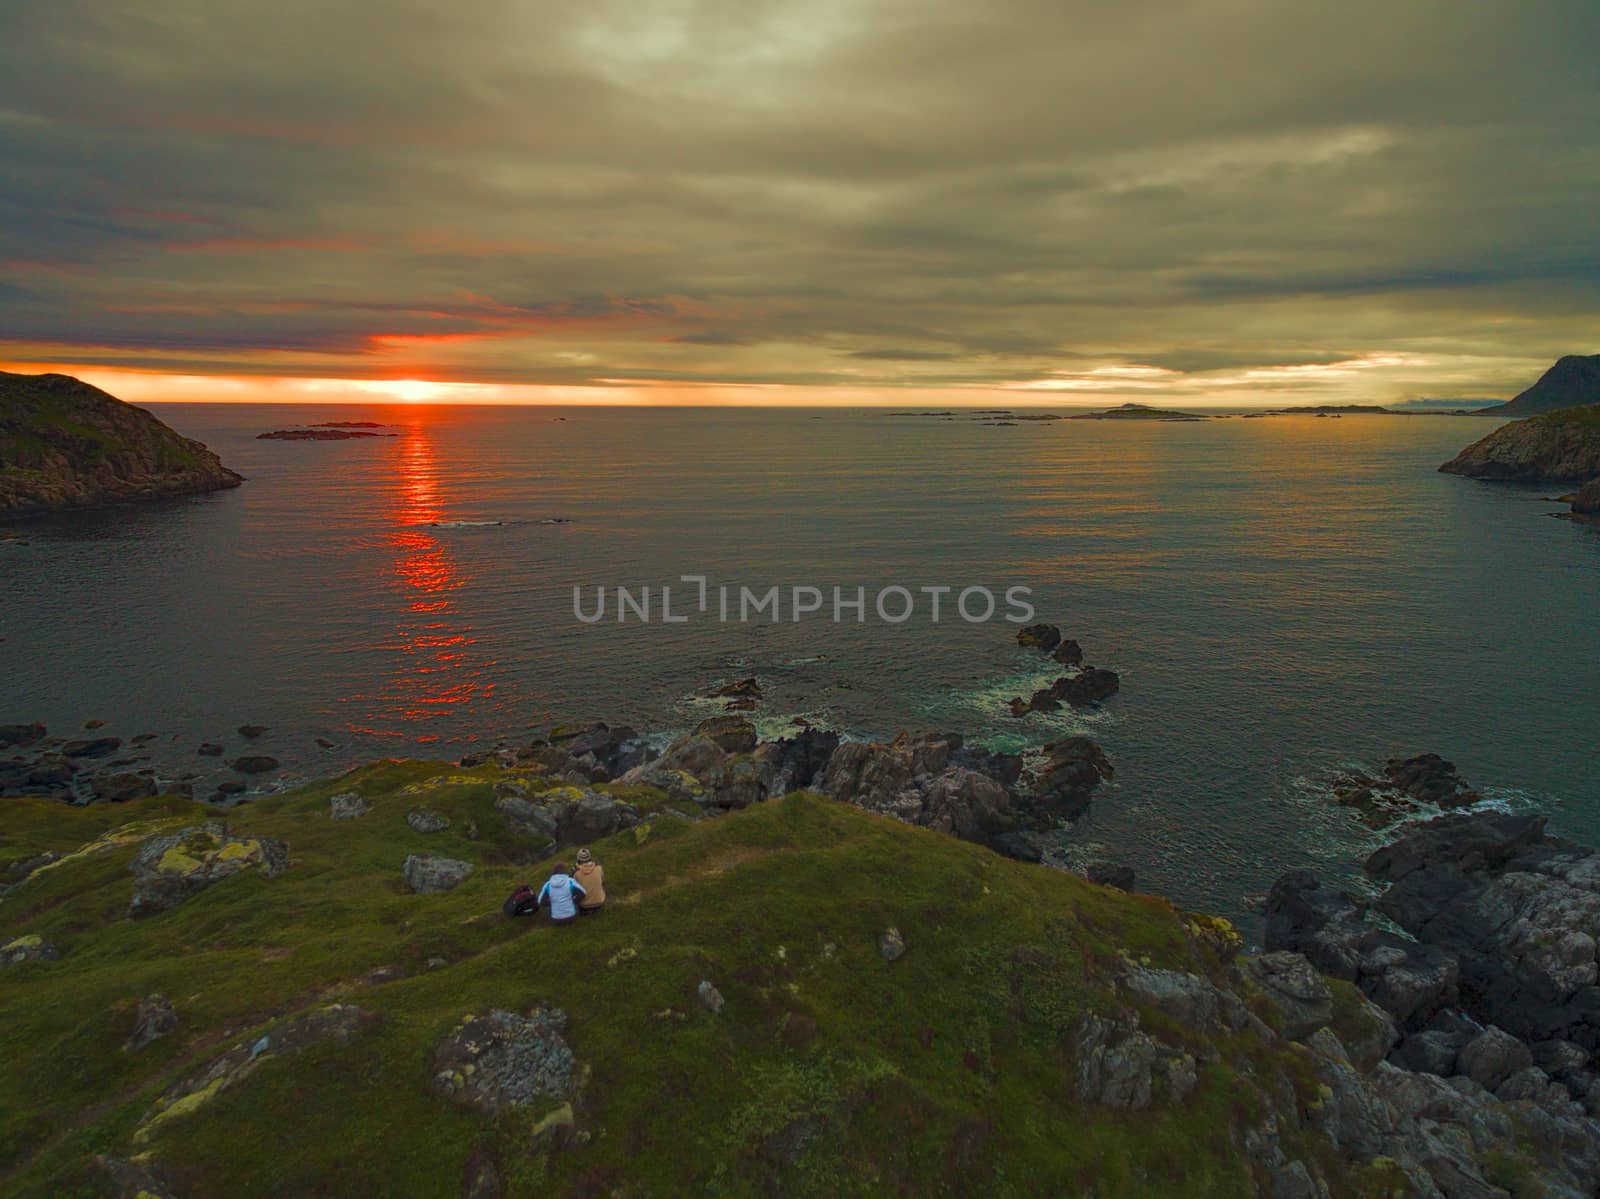 Midnight sun on Vesteralen islands in Norway